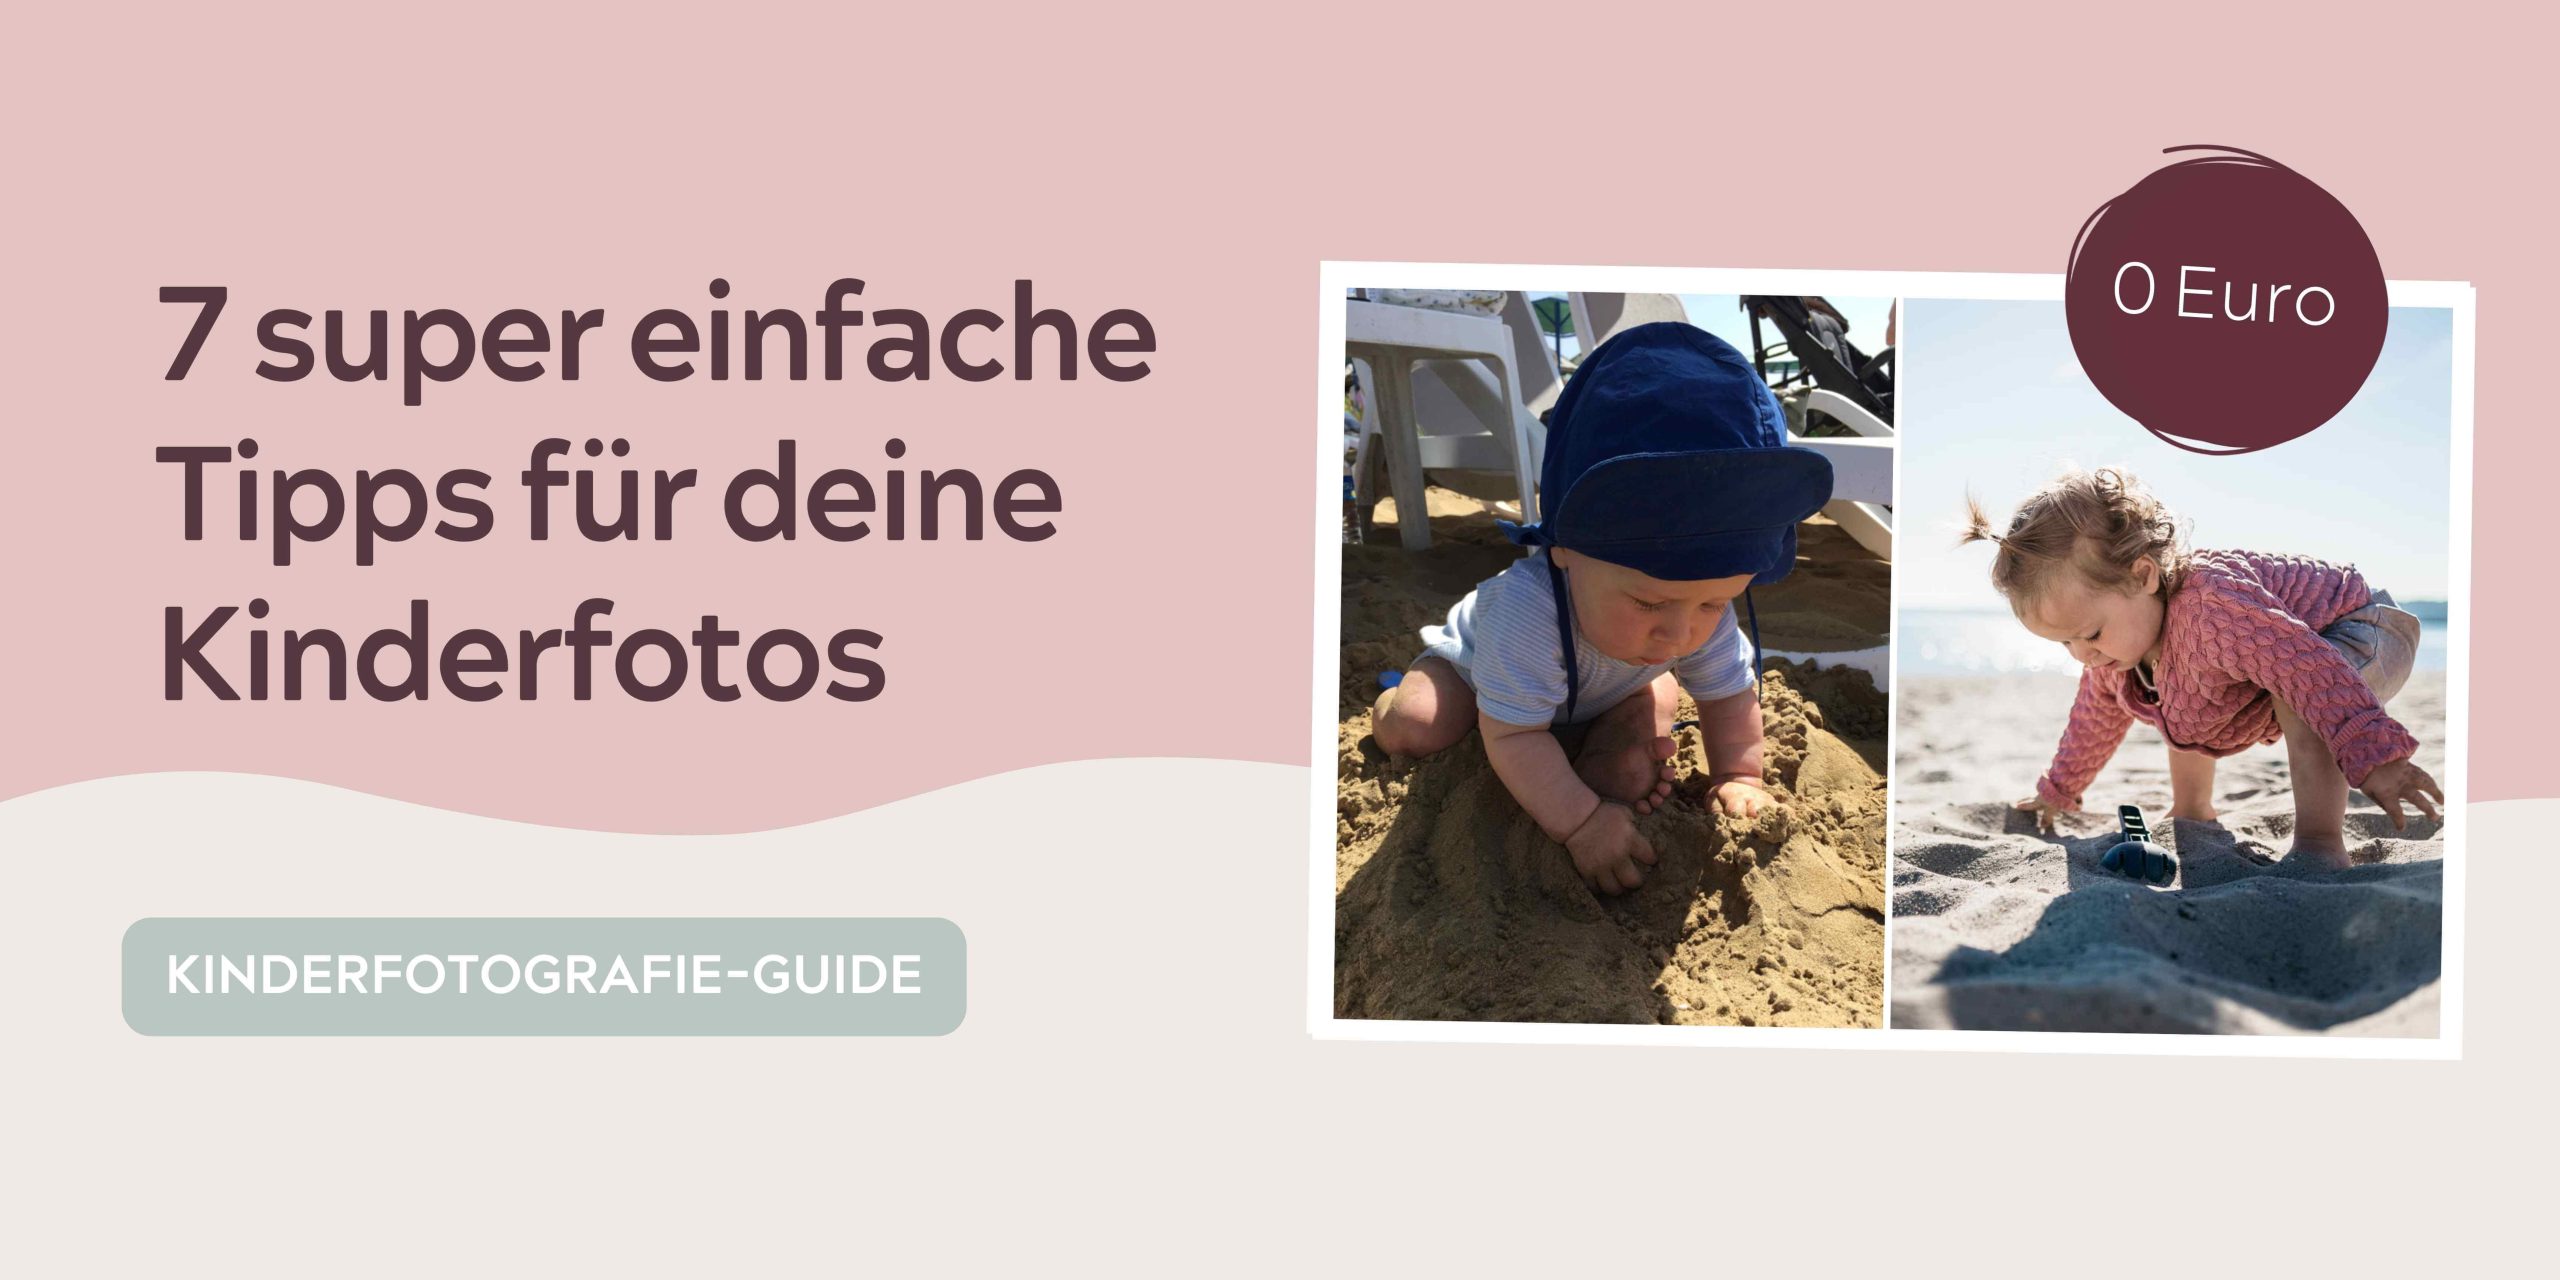 Kinderfotografie-Guide